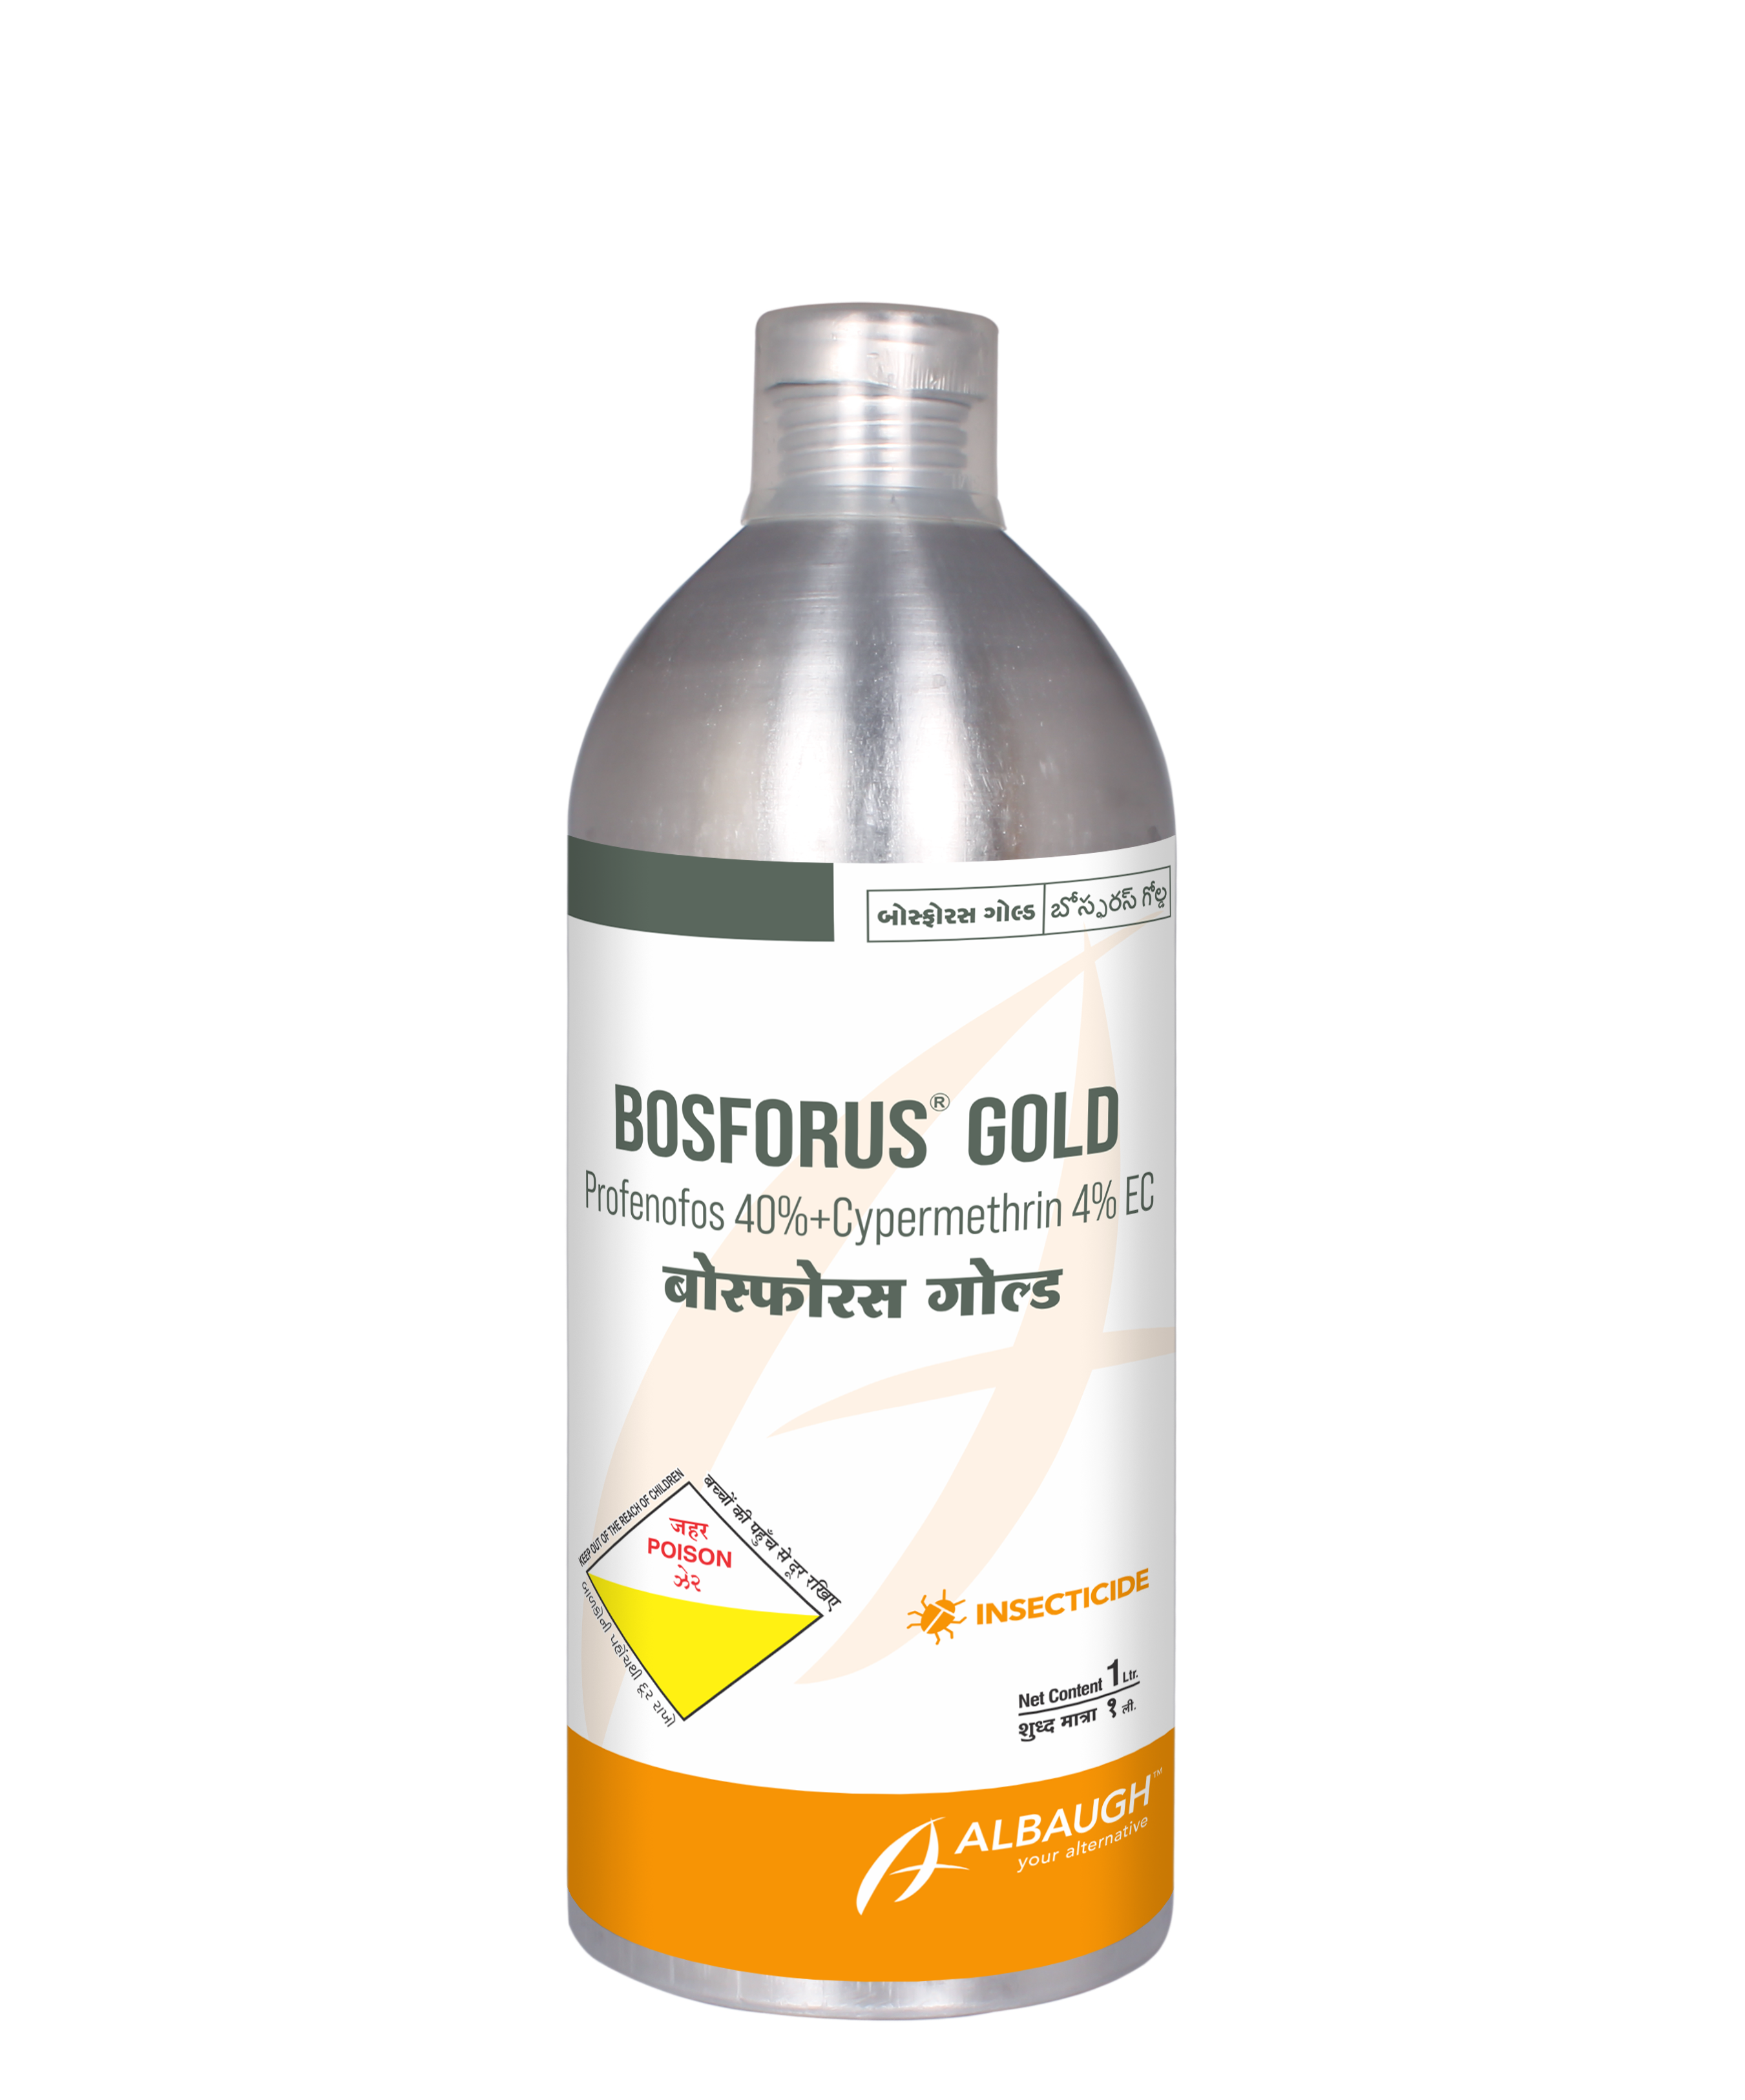 Bosforus Gold: Profenofos 40% + Cypermethrin 4% EC